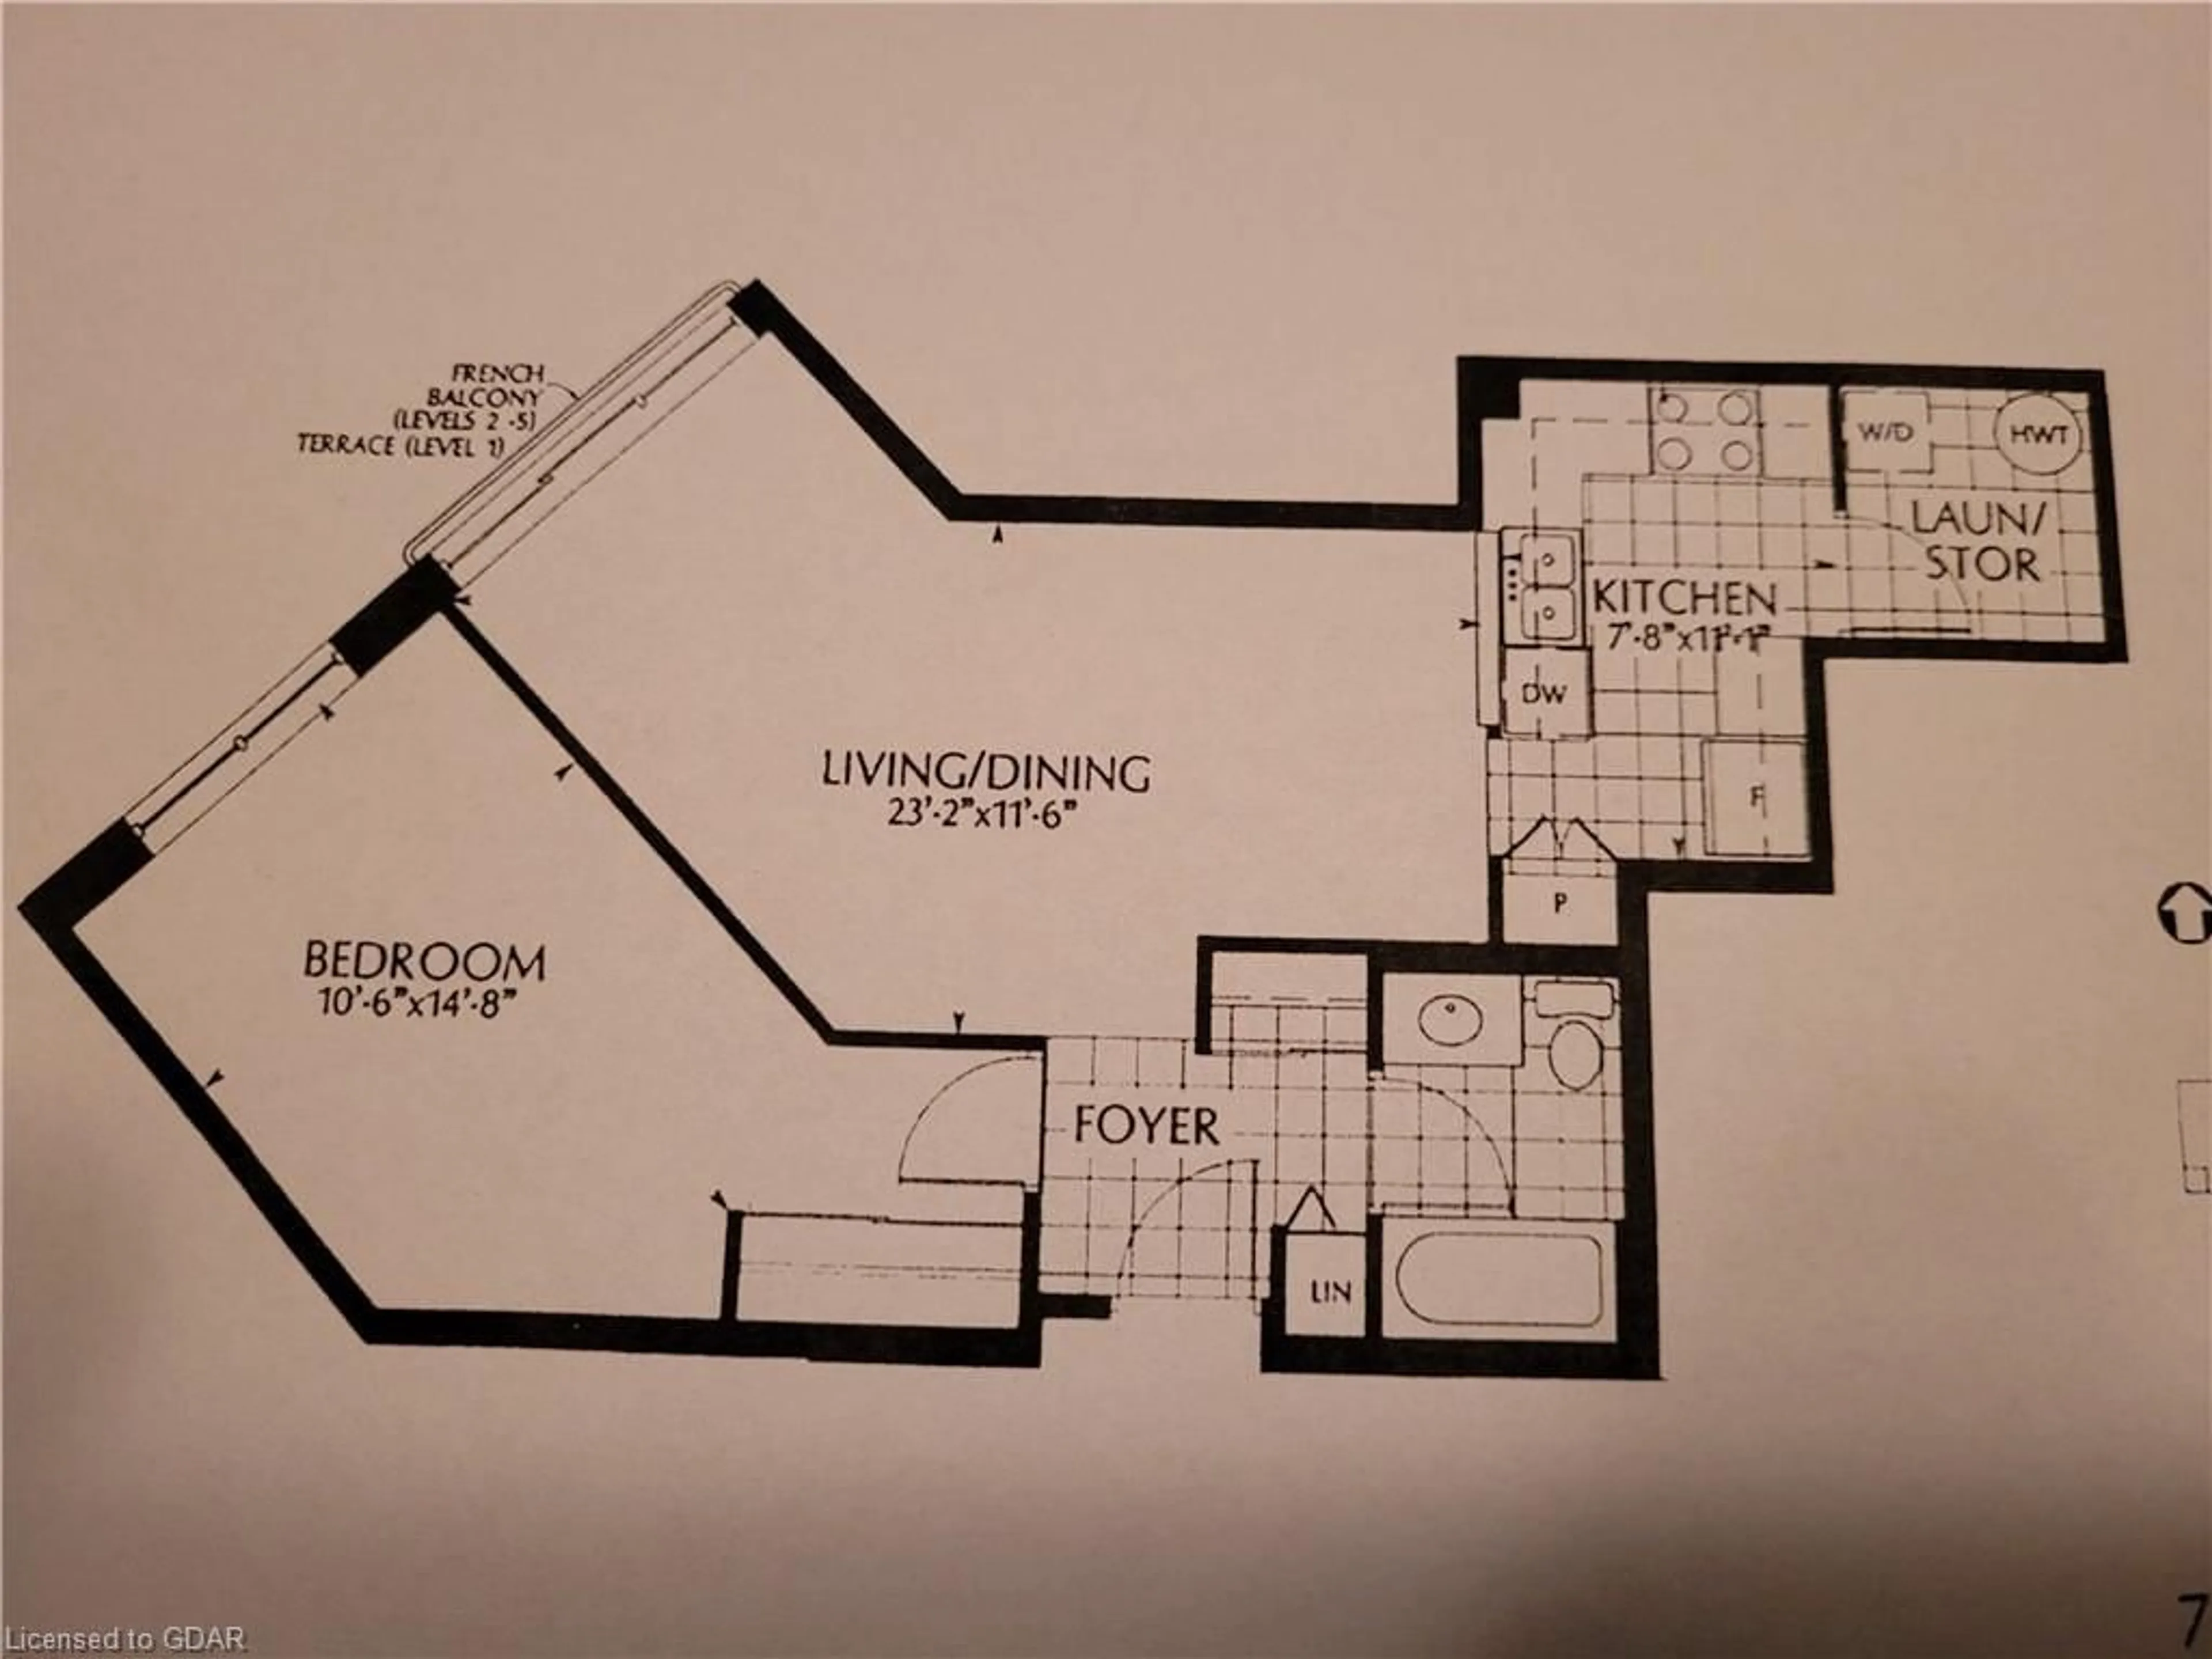 Floor plan for 20 St George St #207, Kitchener Ontario N2G 2S7